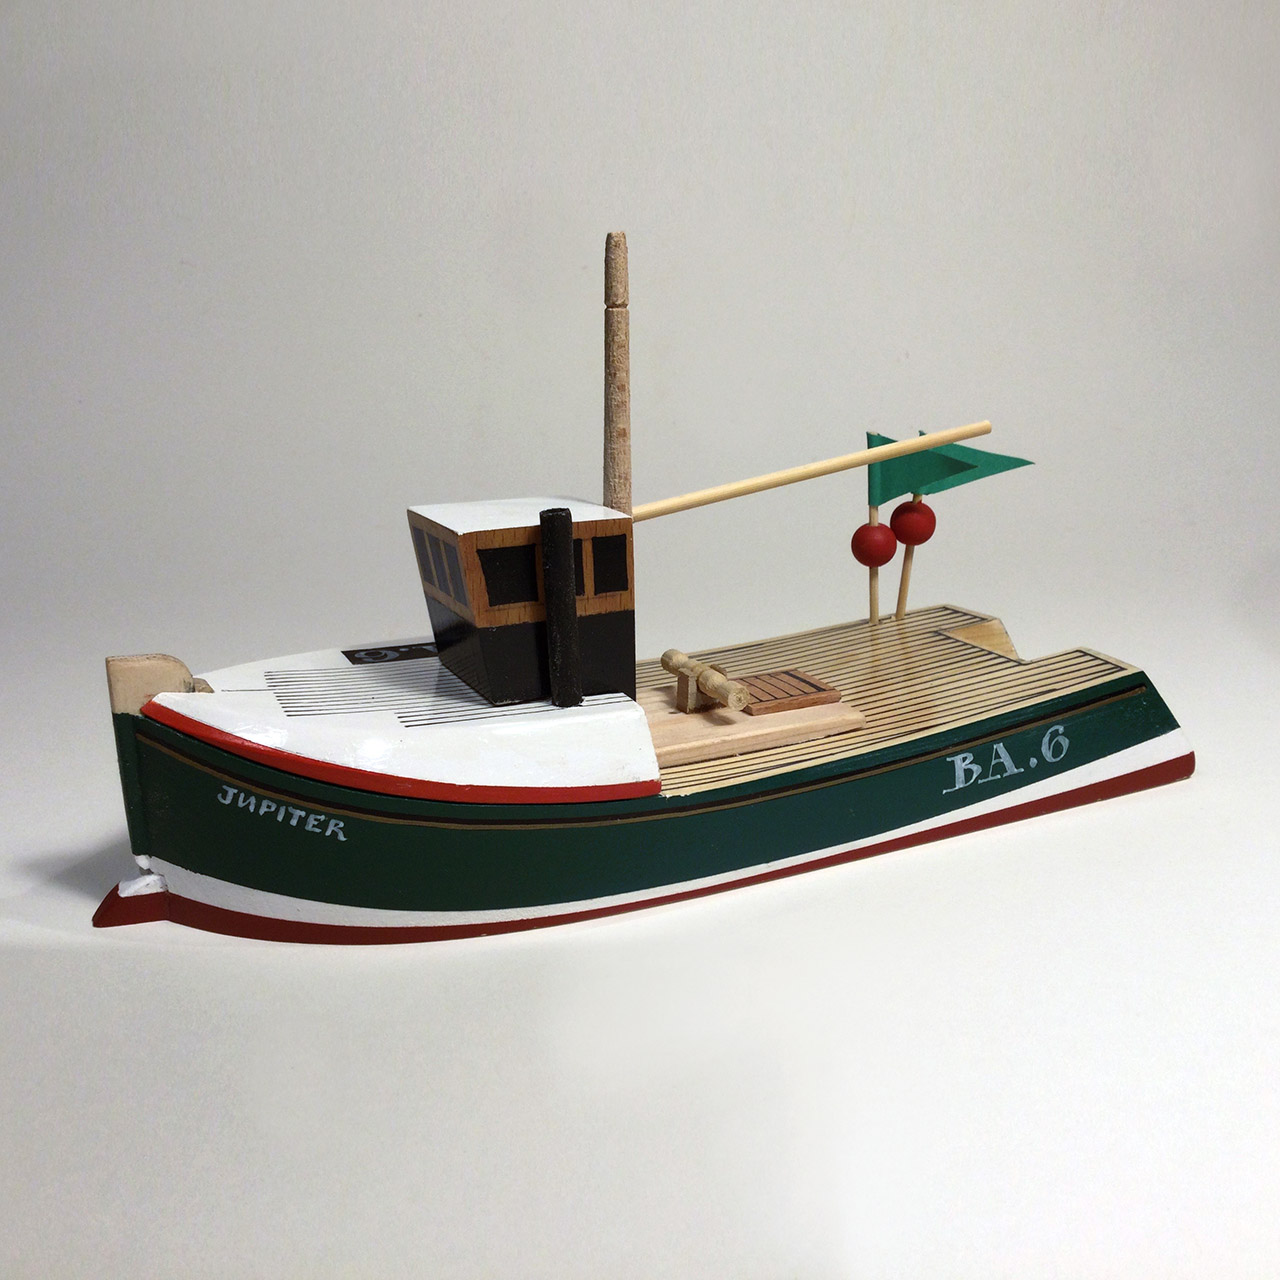 Modern inshore creel boat, circa 2000